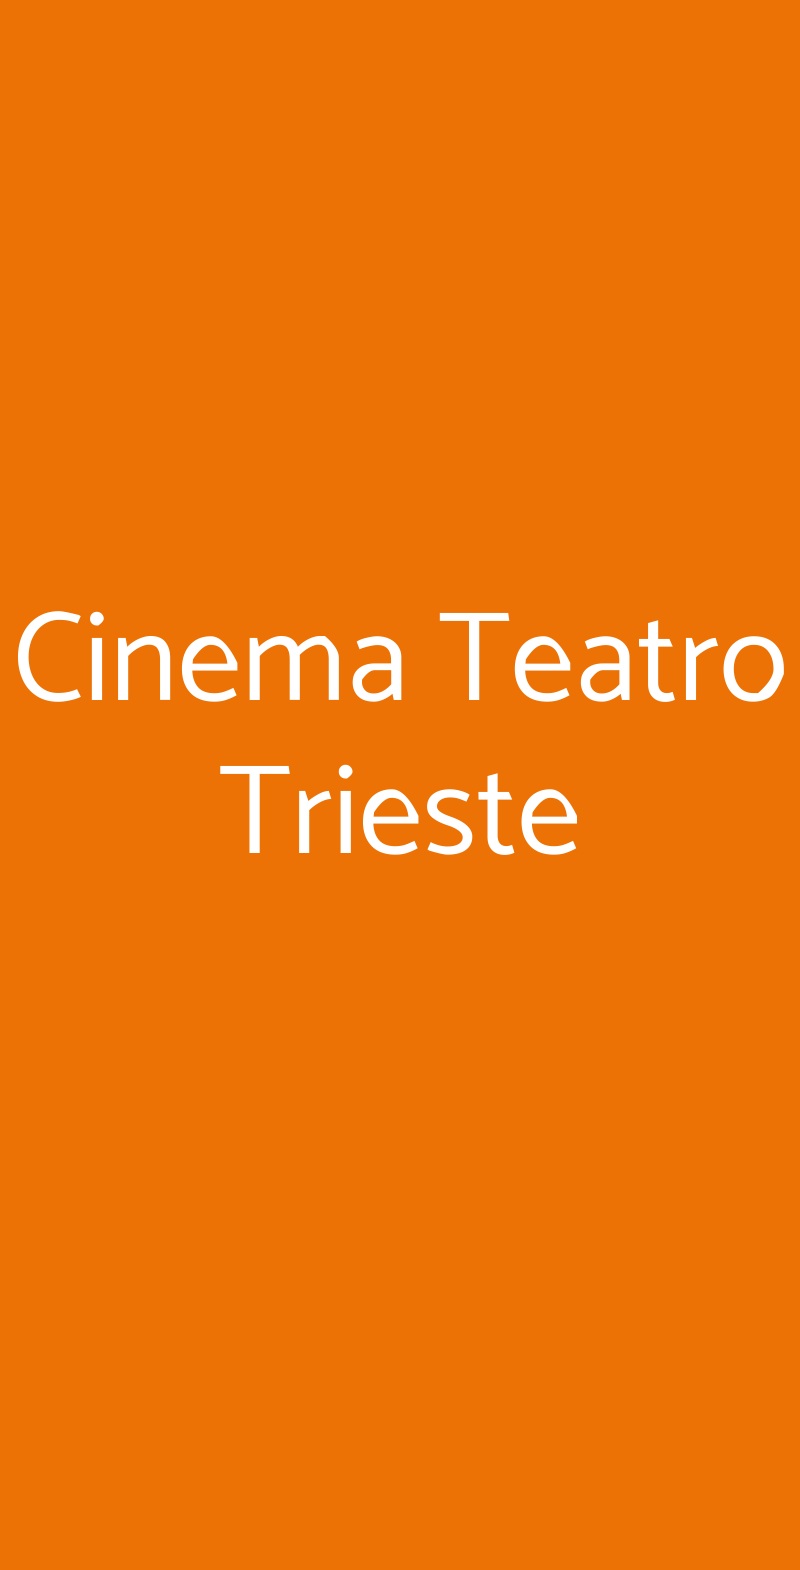 Cinema Teatro Trieste Milano menù 1 pagina